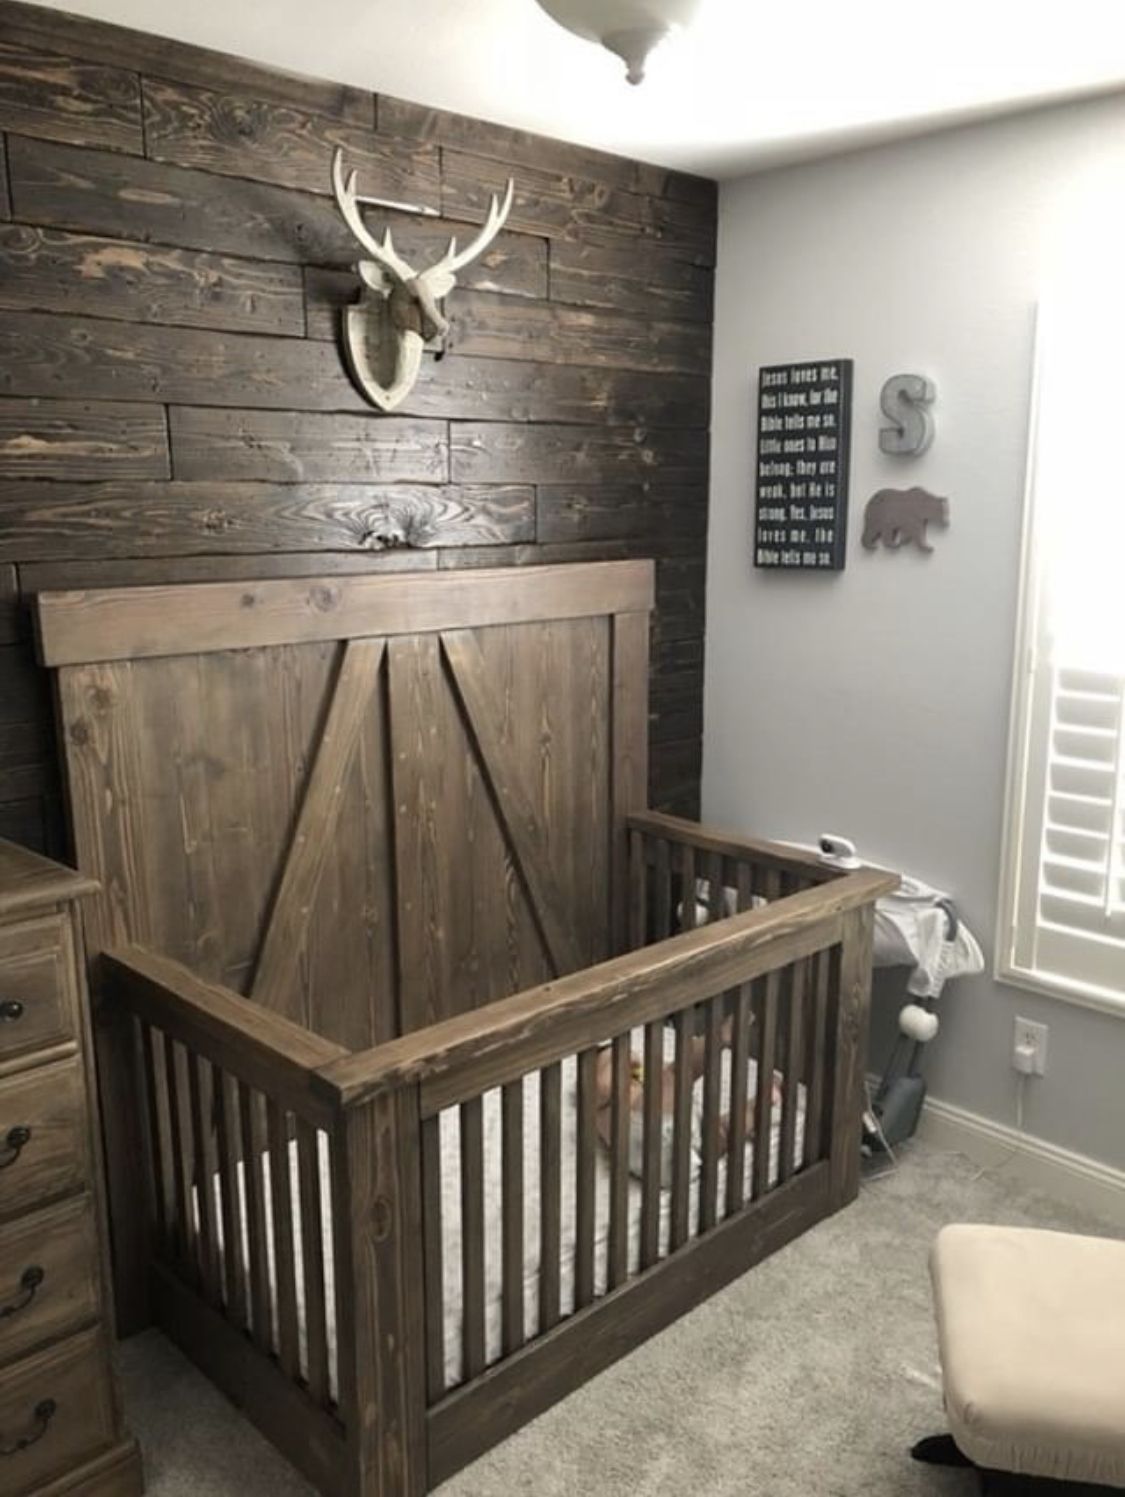 16 diy Baby crib ideas